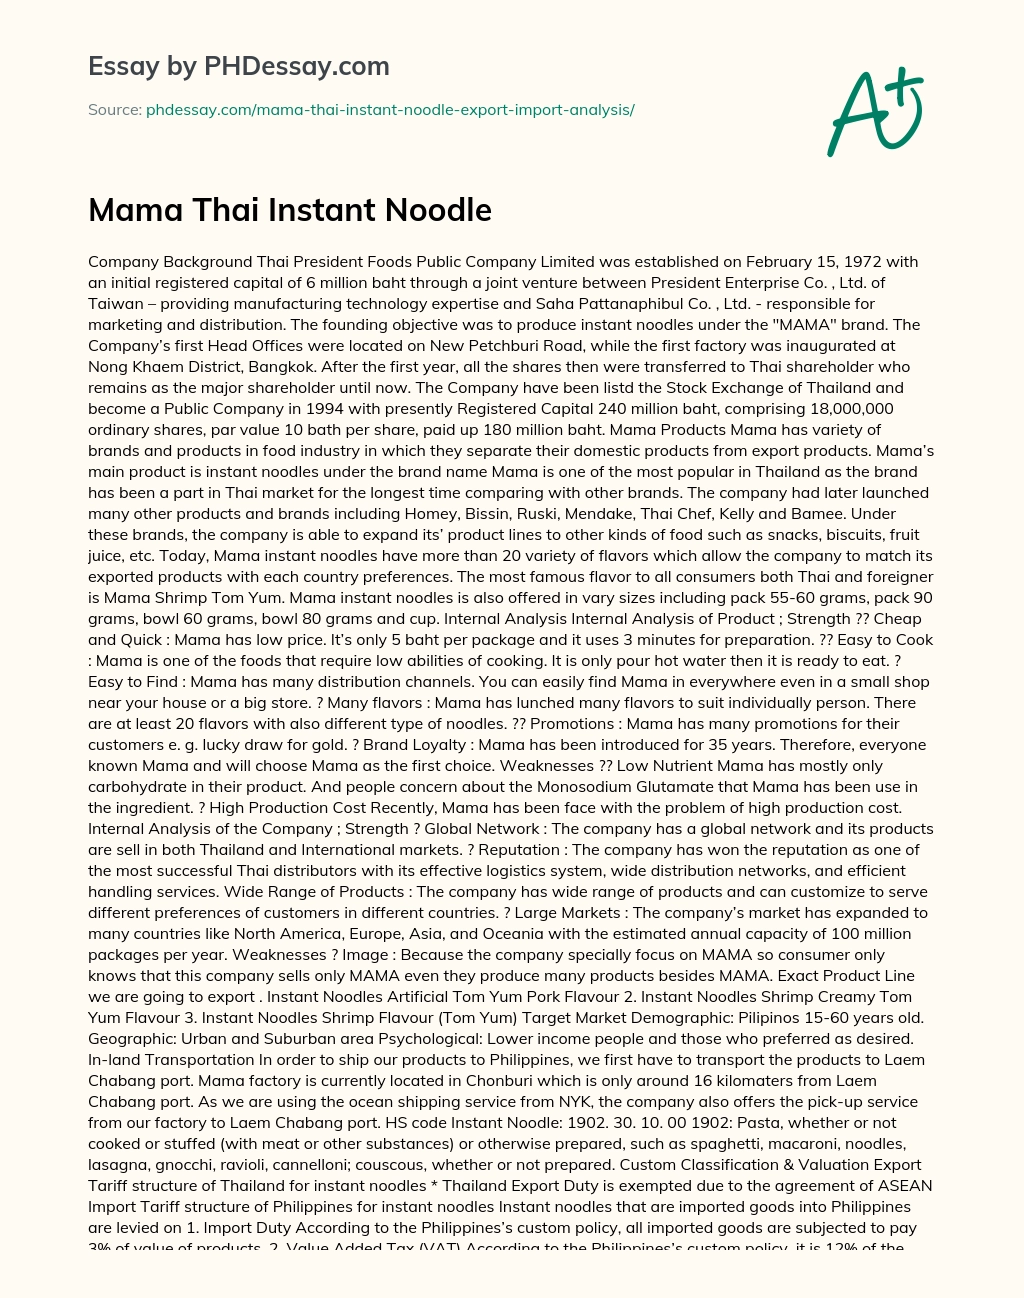 Mama Thai Instant Noodle essay